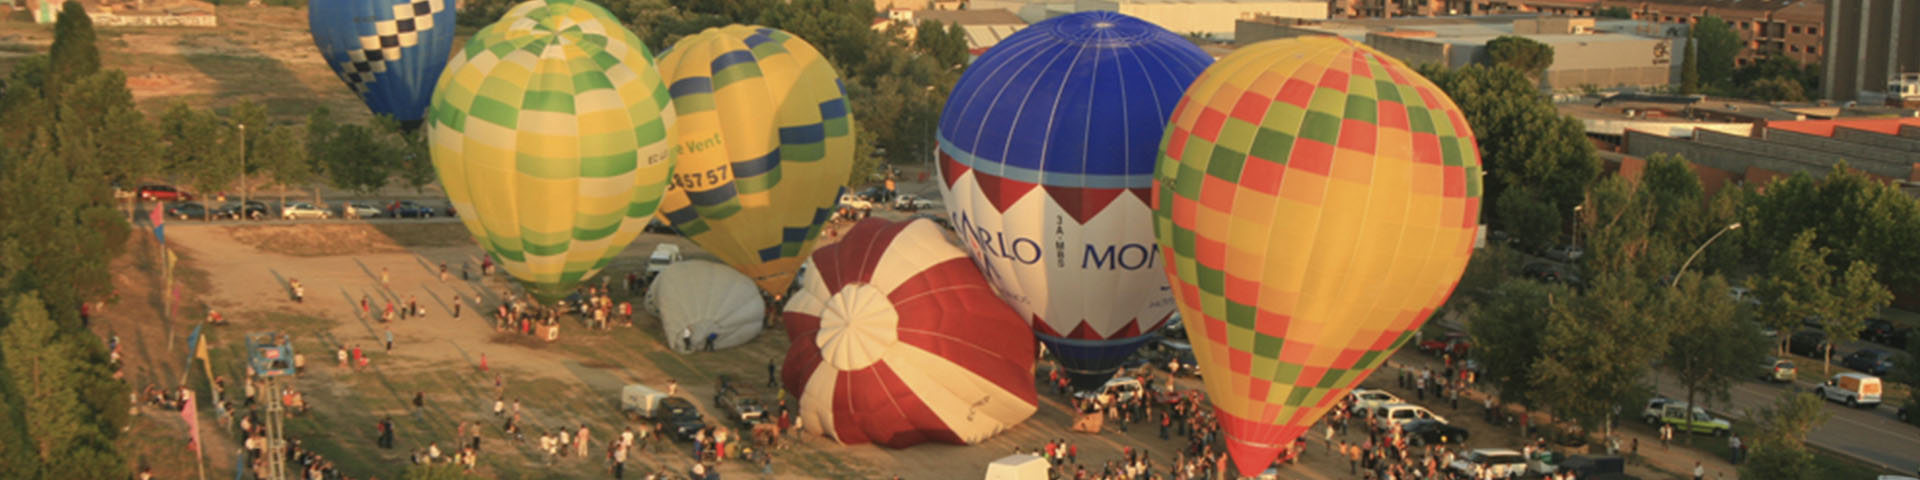 Festival de vols en globus - European Balloon Festival EBF (text)